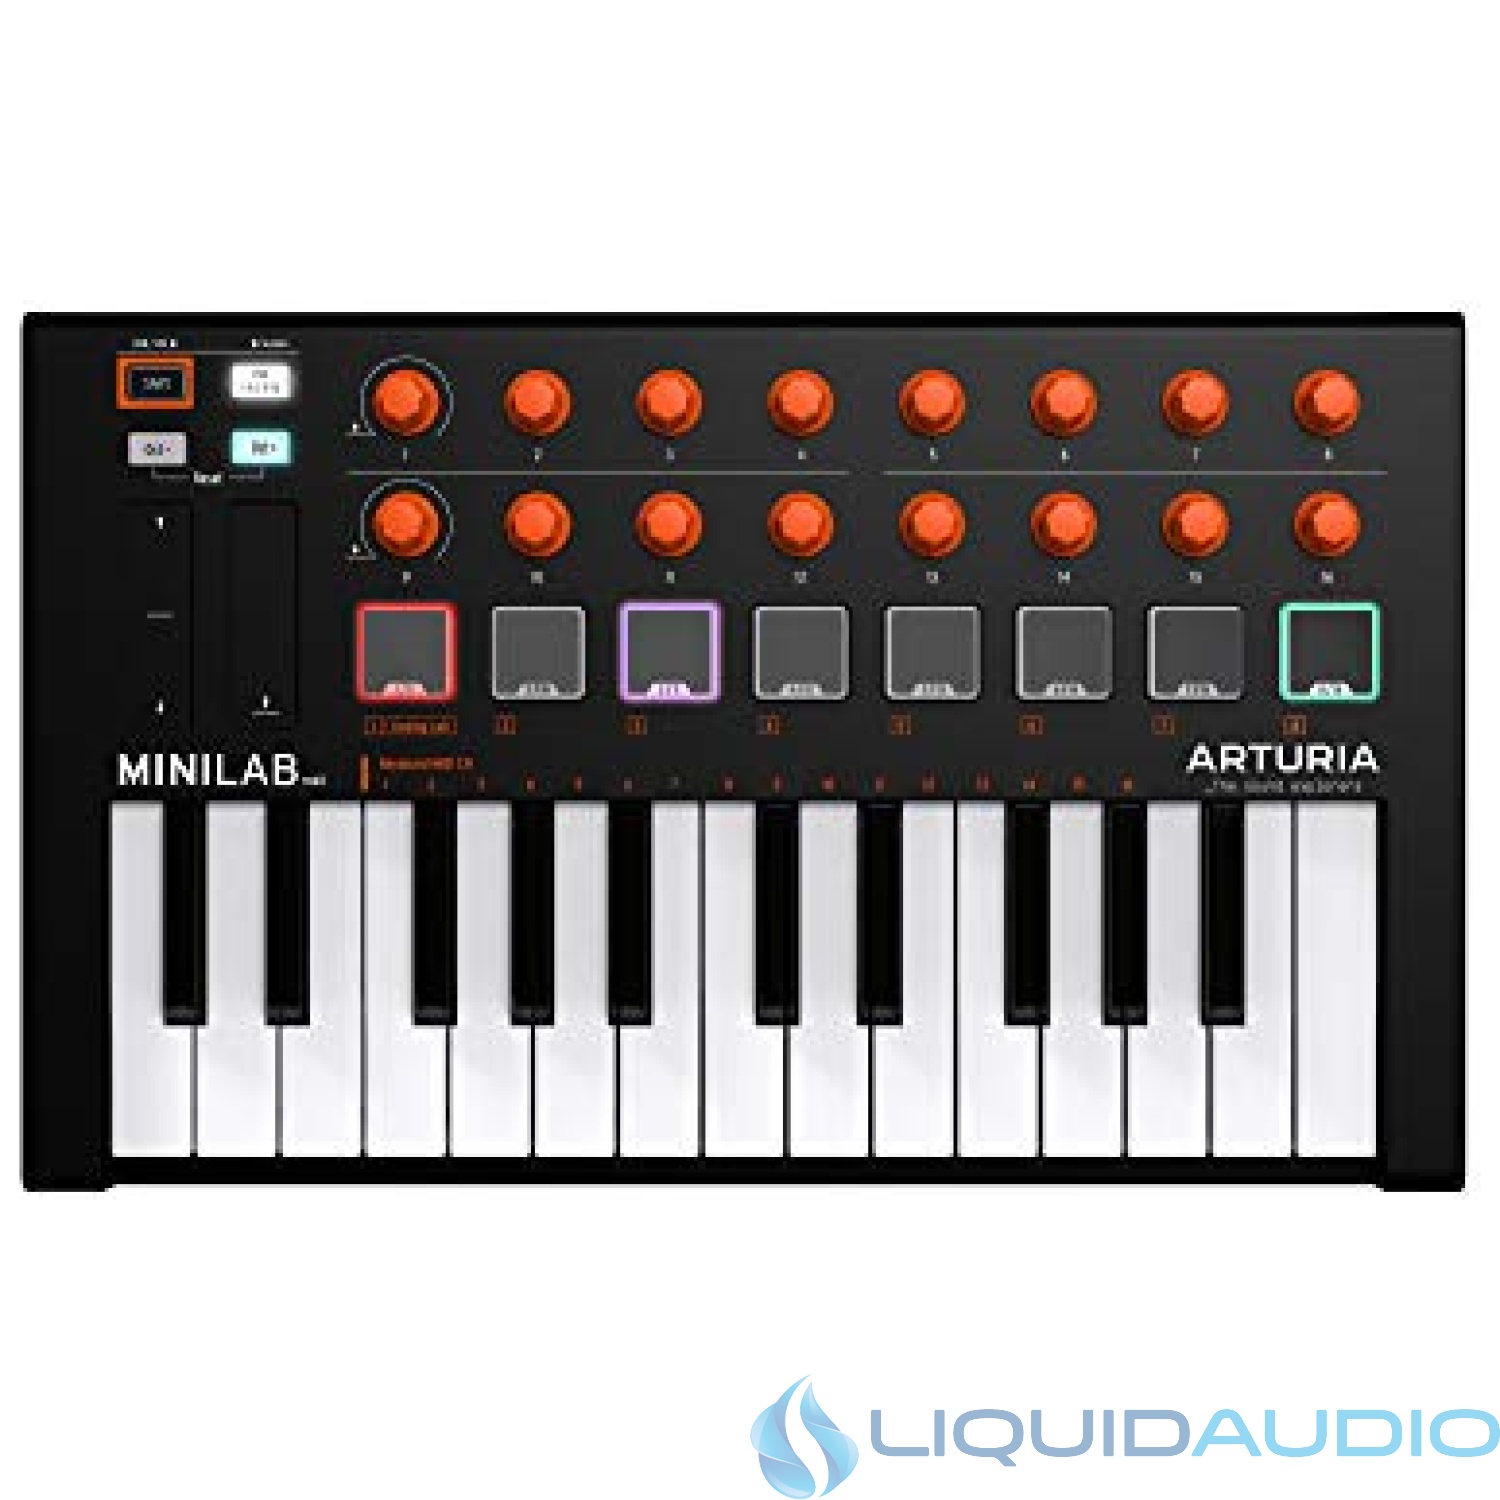 Arturia MiniLab MKII 25-Key USB MIDI Controller (Orange Edition)